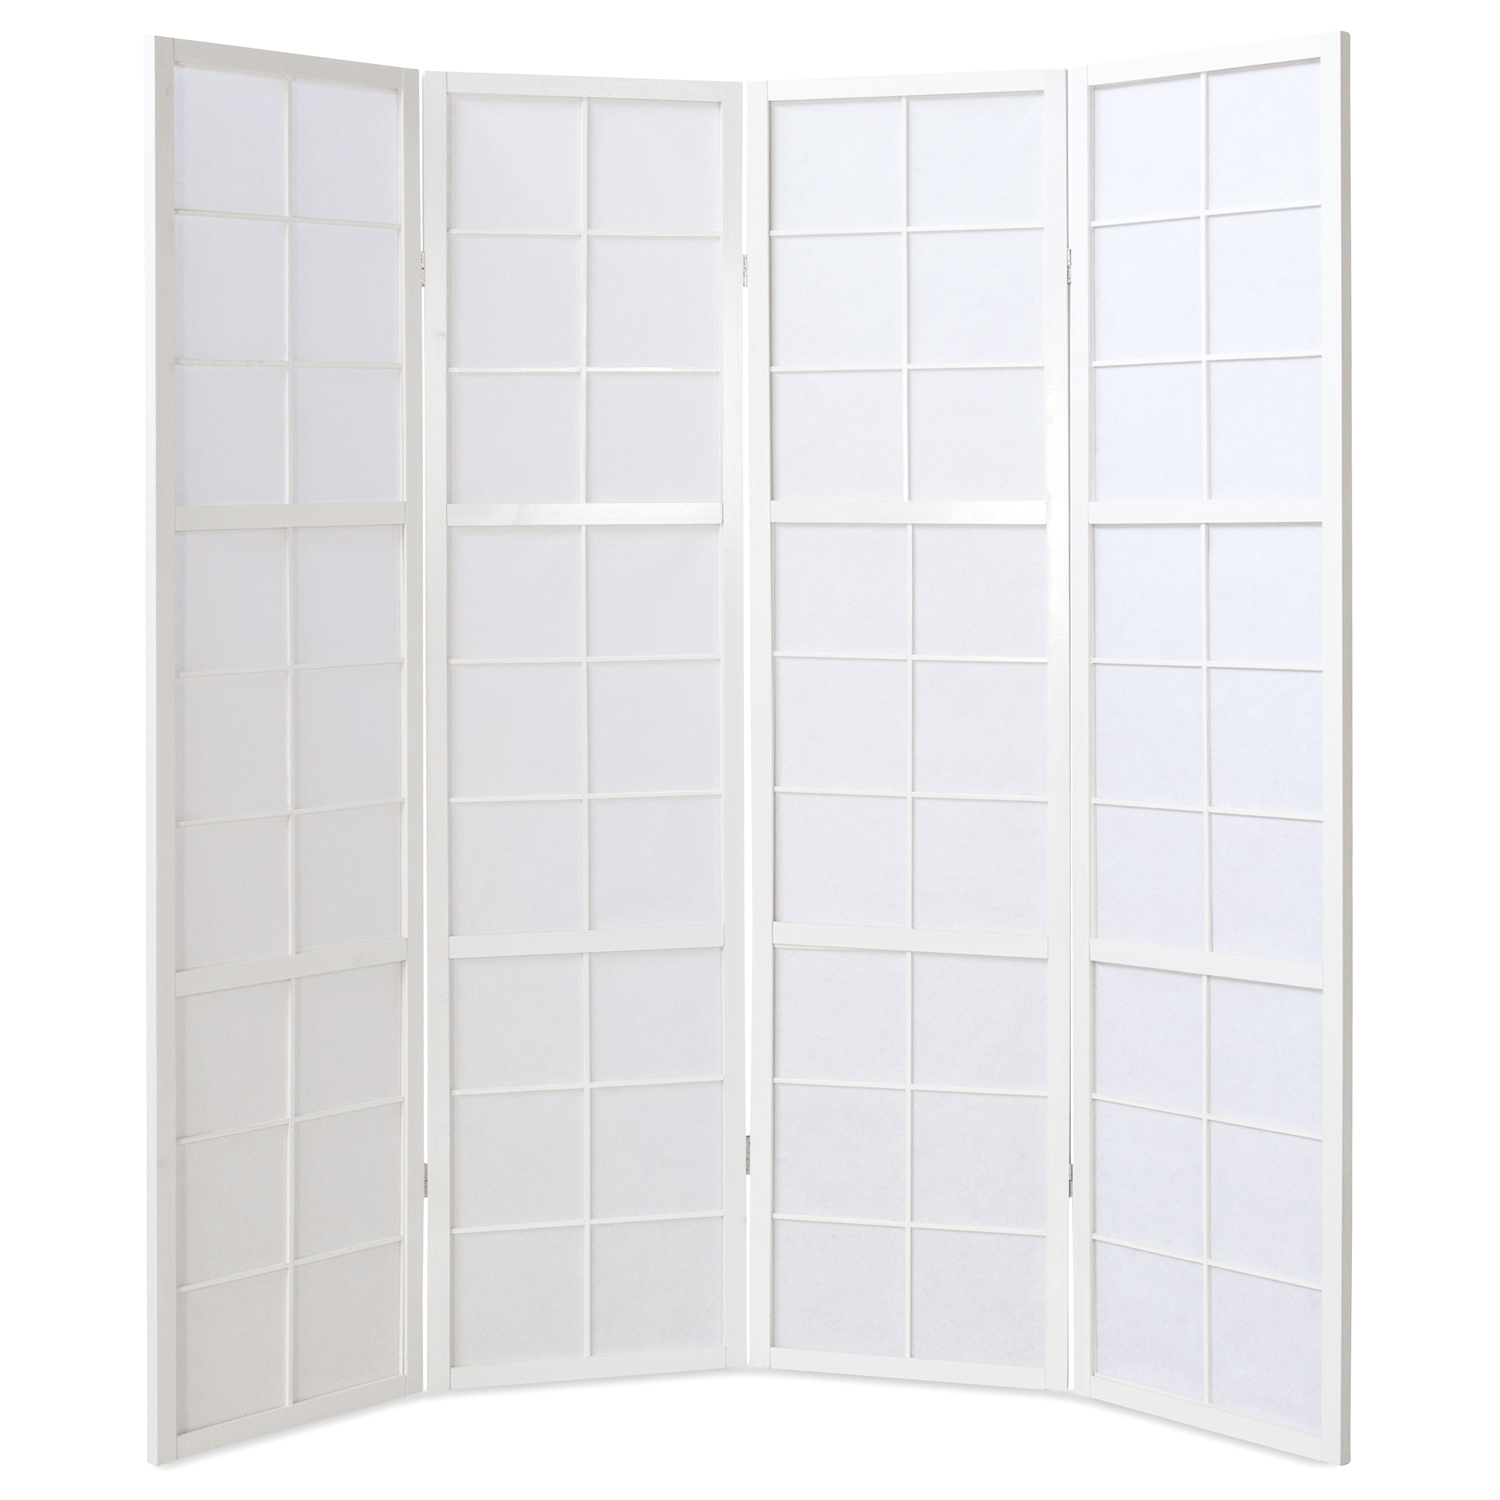 Paravent Raumteiler 4 teilig Trennwand Shoji Faltbar Weiß